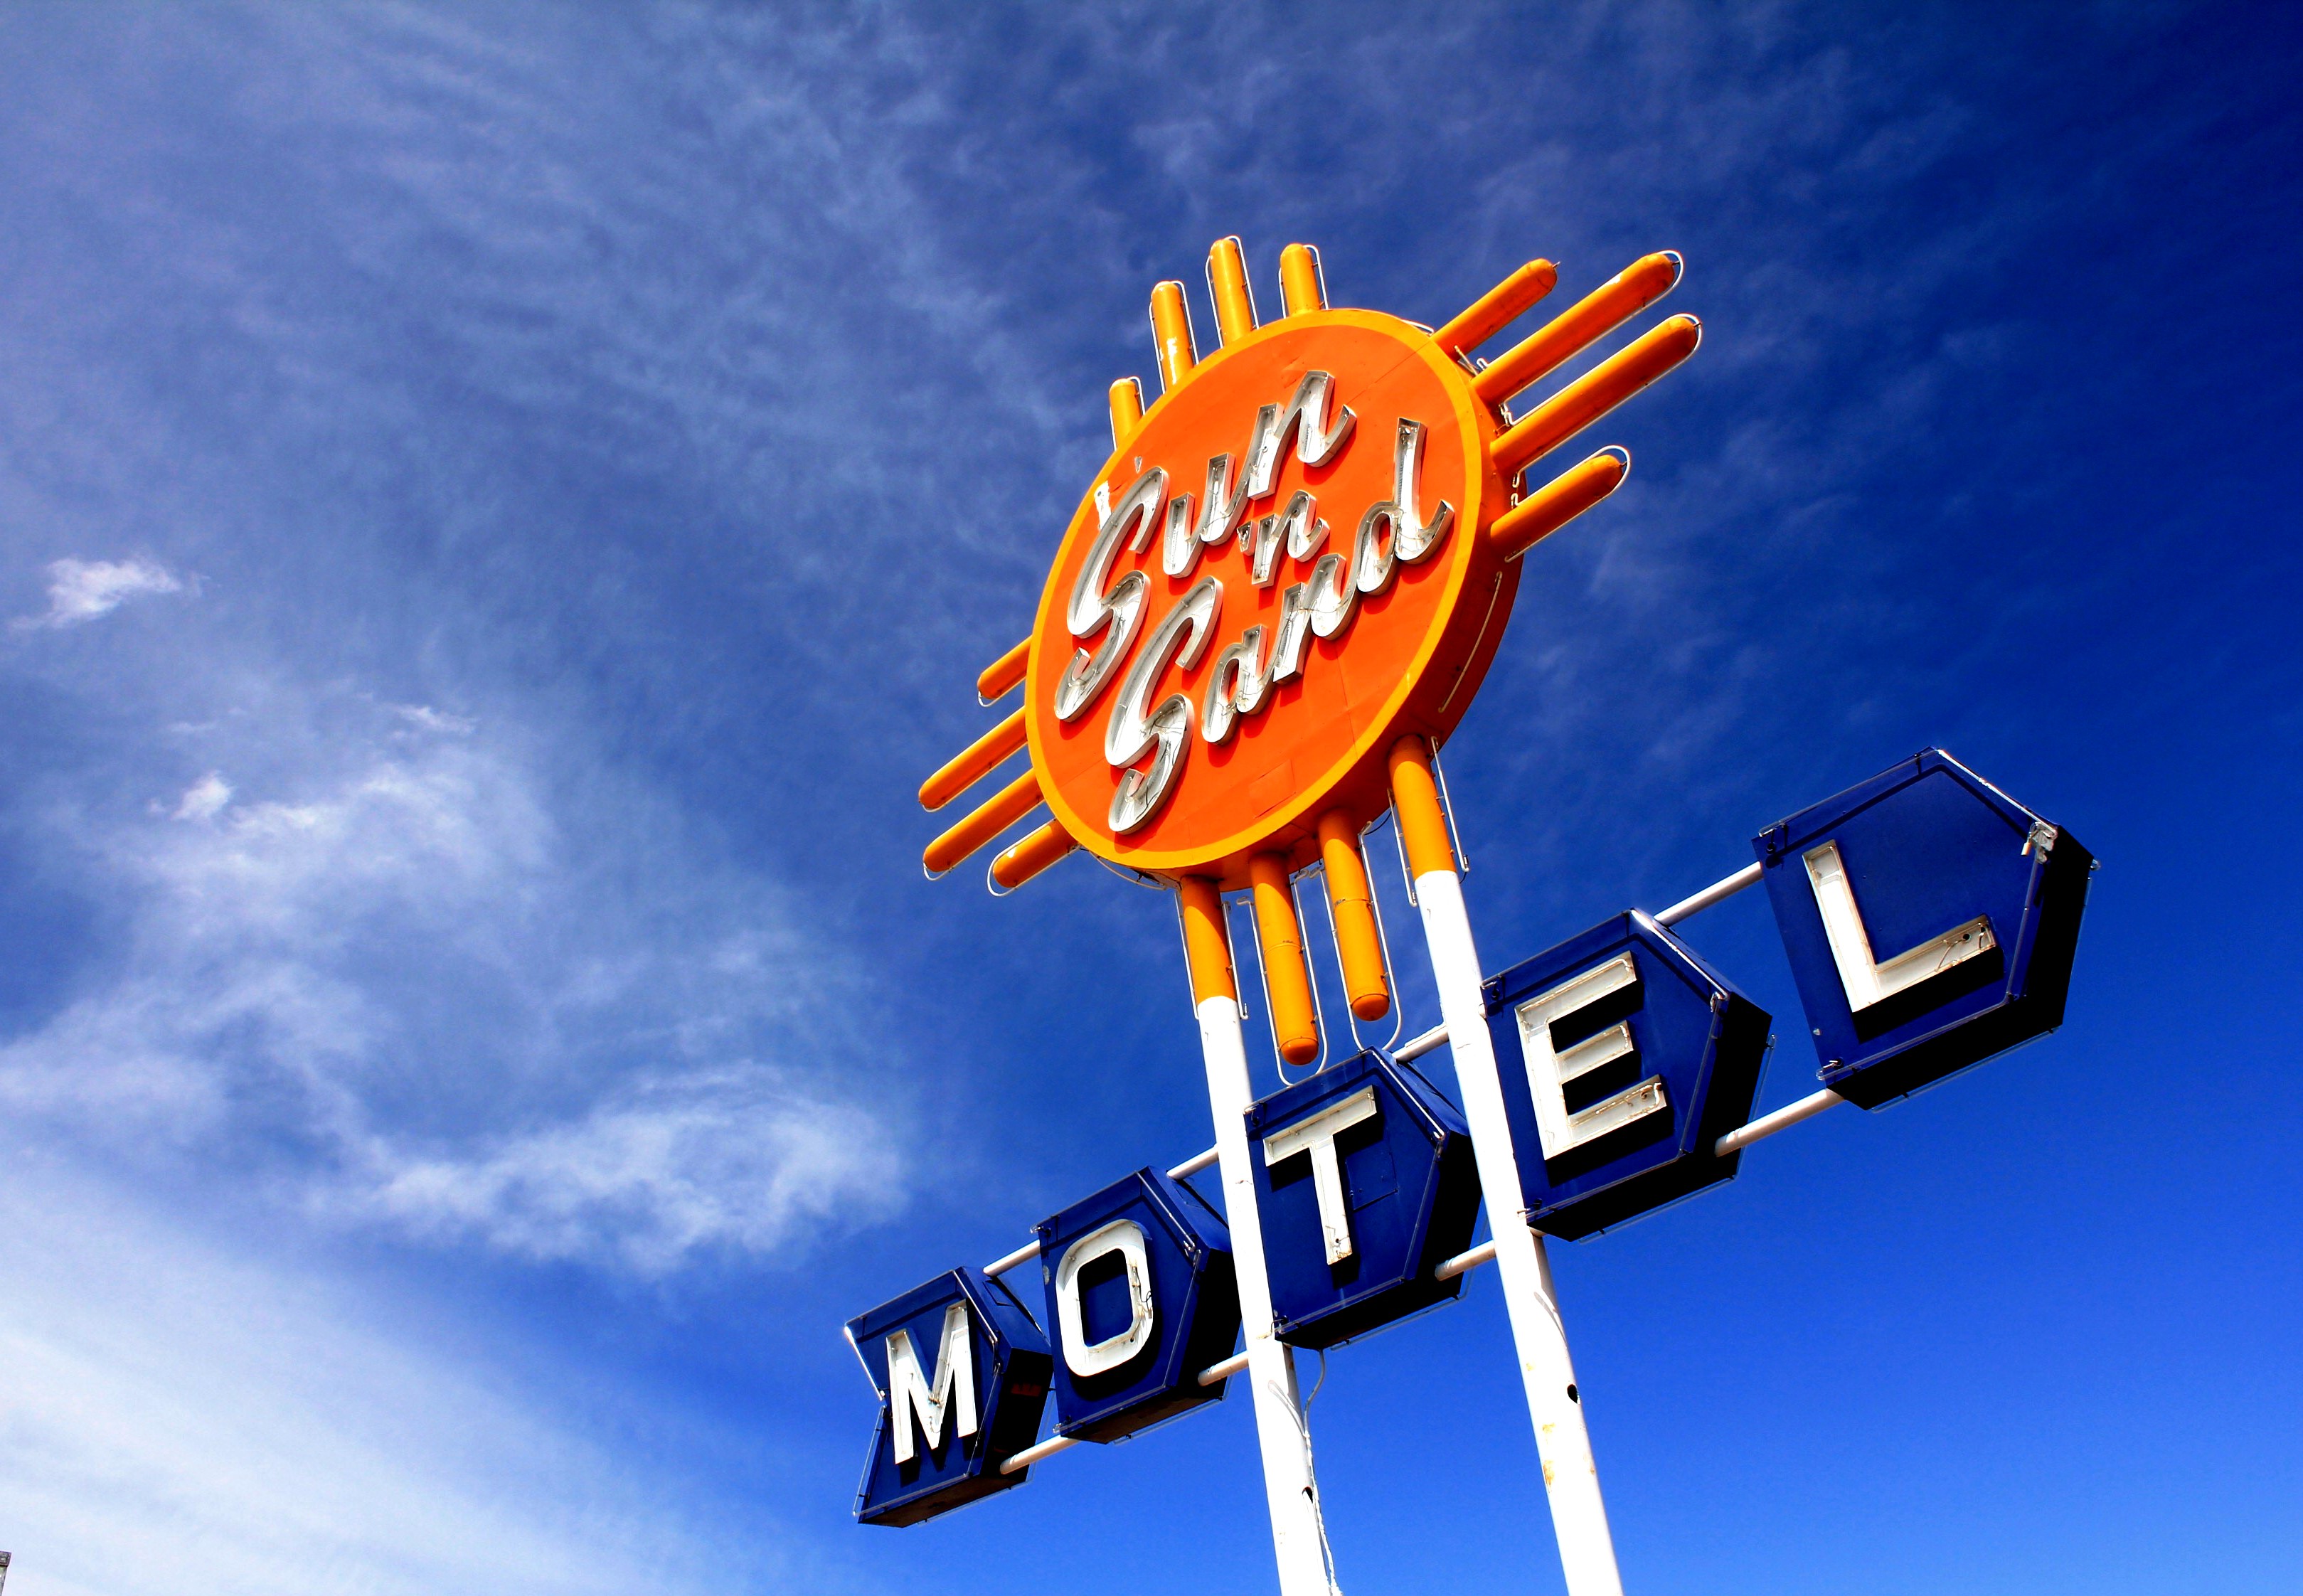 Sun 'n Sand Motel - 2026 Route 66, Santa Rosa, New Mexico U.S.A. - April 30, 2011